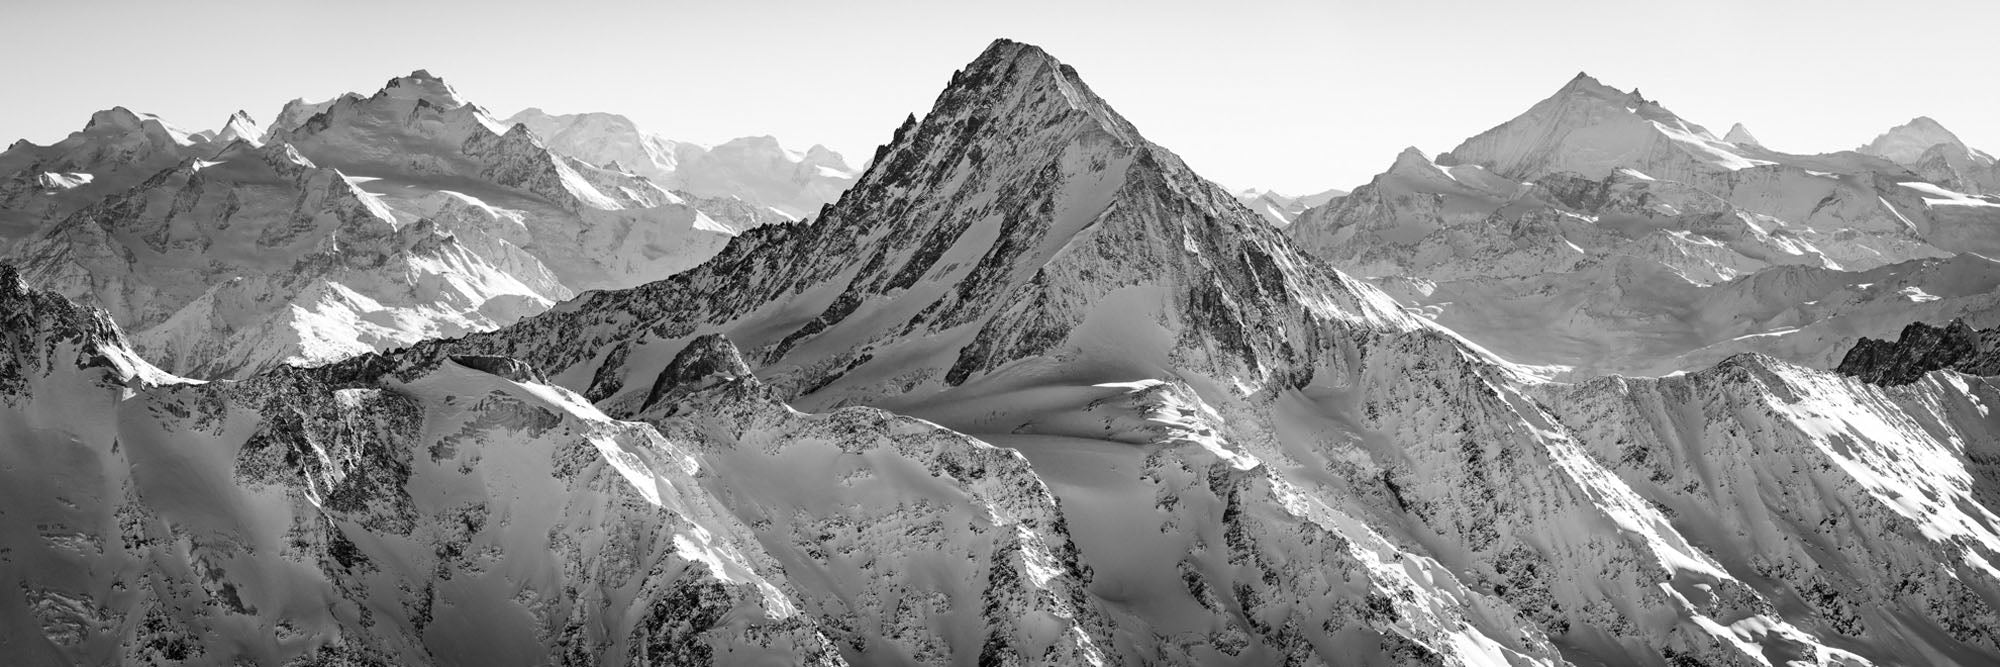 Valais Alps, Panorama, Switzerland (DSC9592).